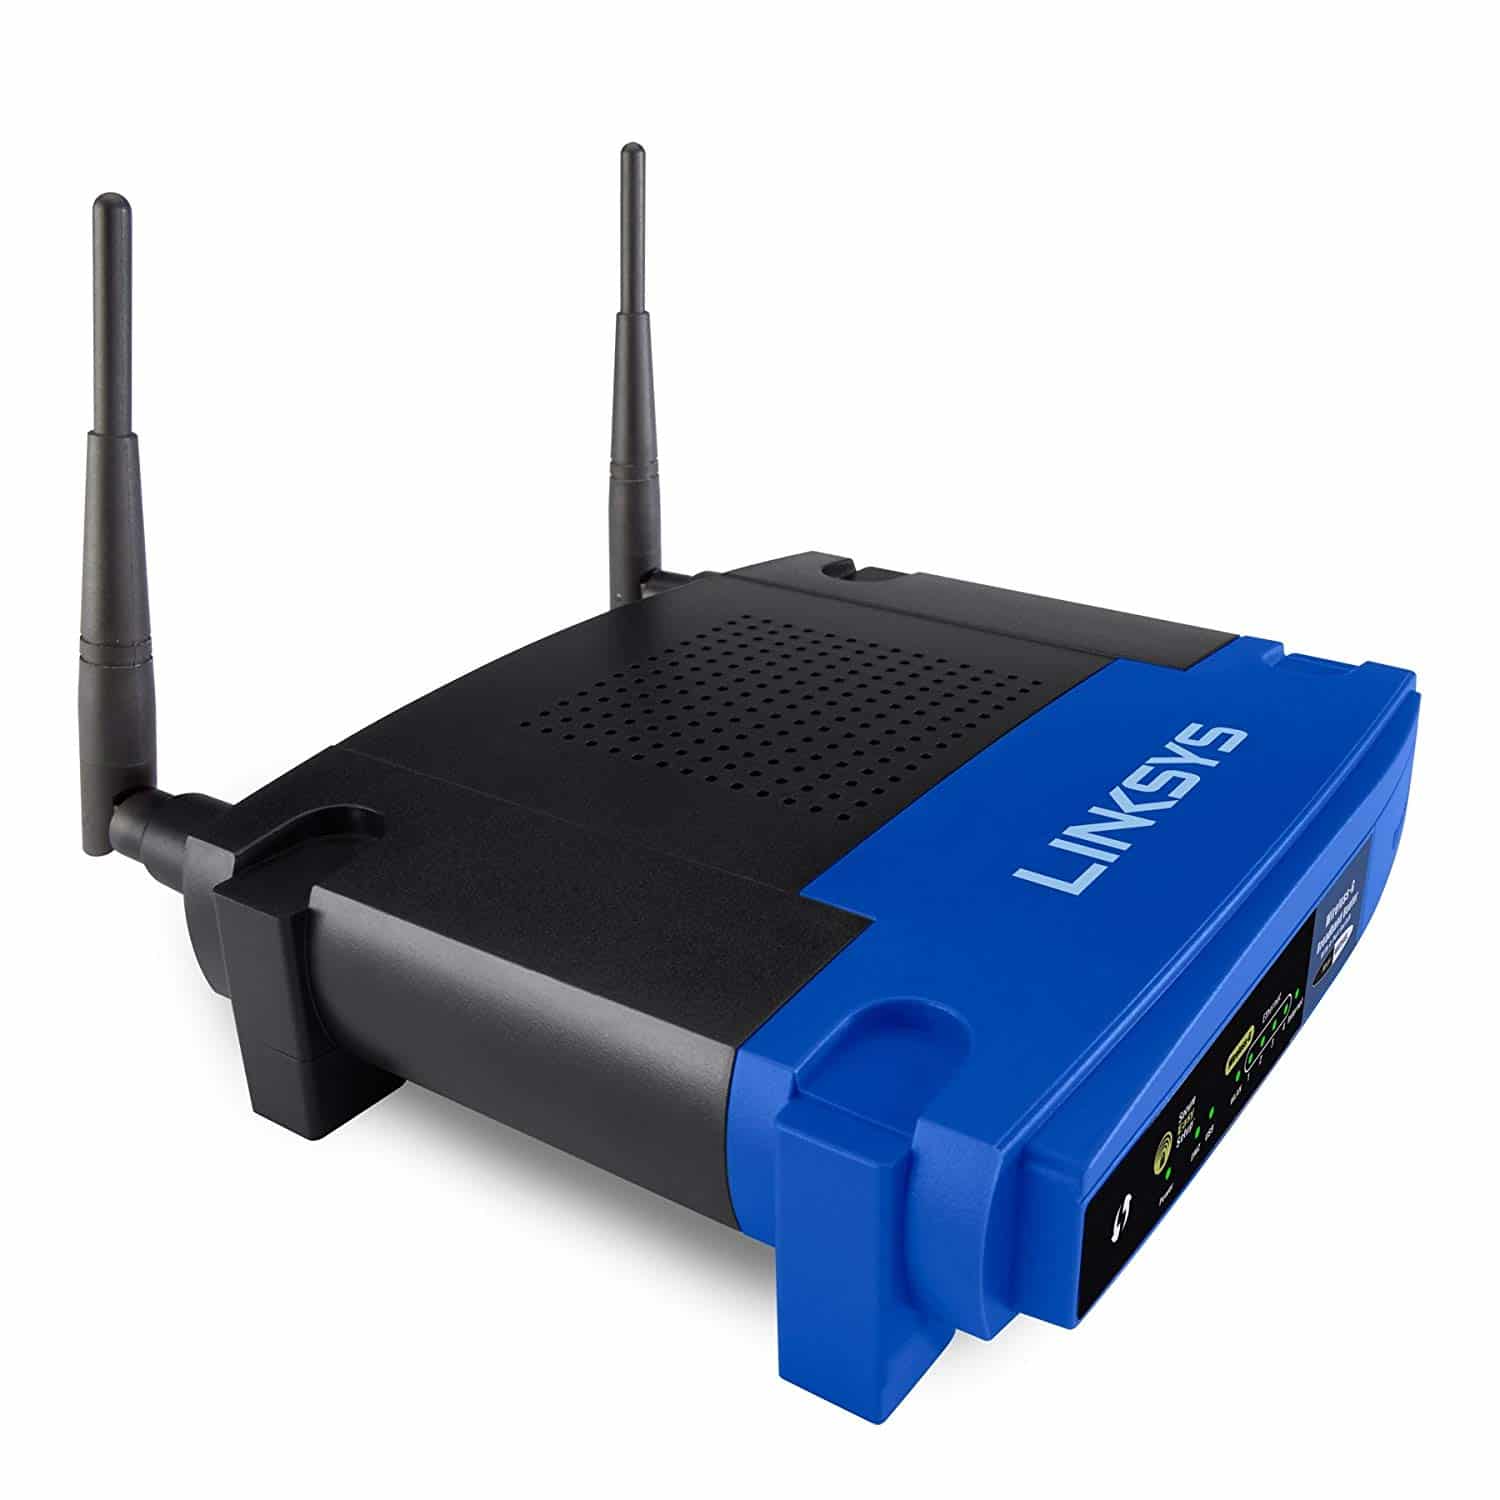 Linksys WRT54GL wifi Wireless-G Broadband Router